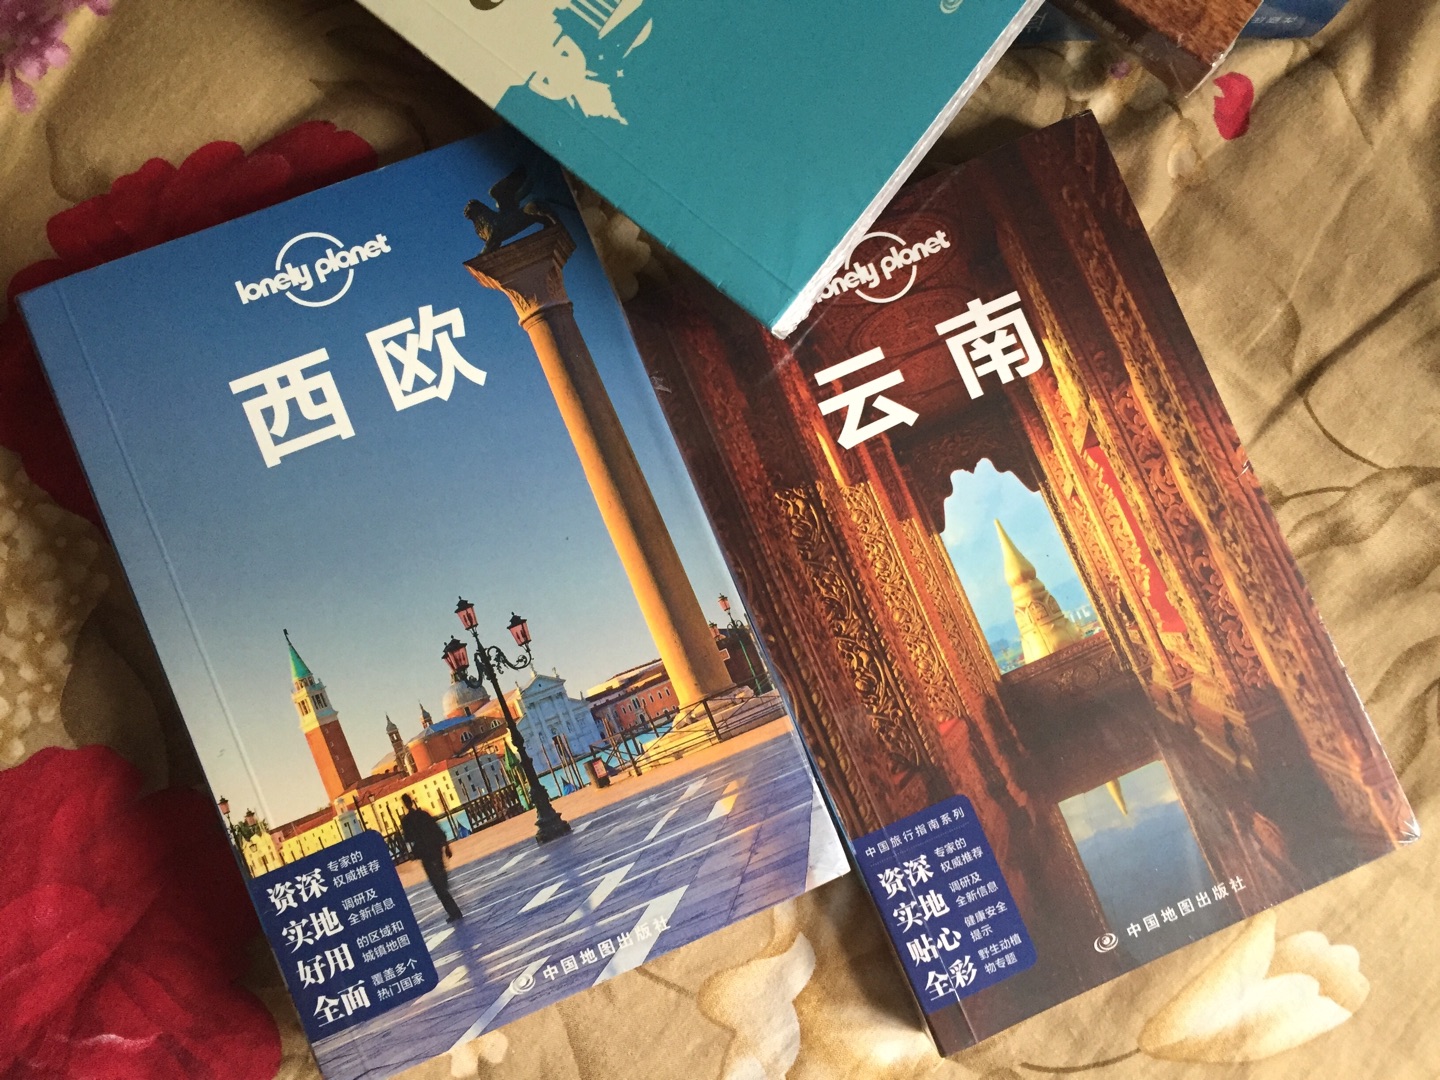 Lonely Planet系列丛书很喜欢，最近计划去西欧，买一本来做旅行参考